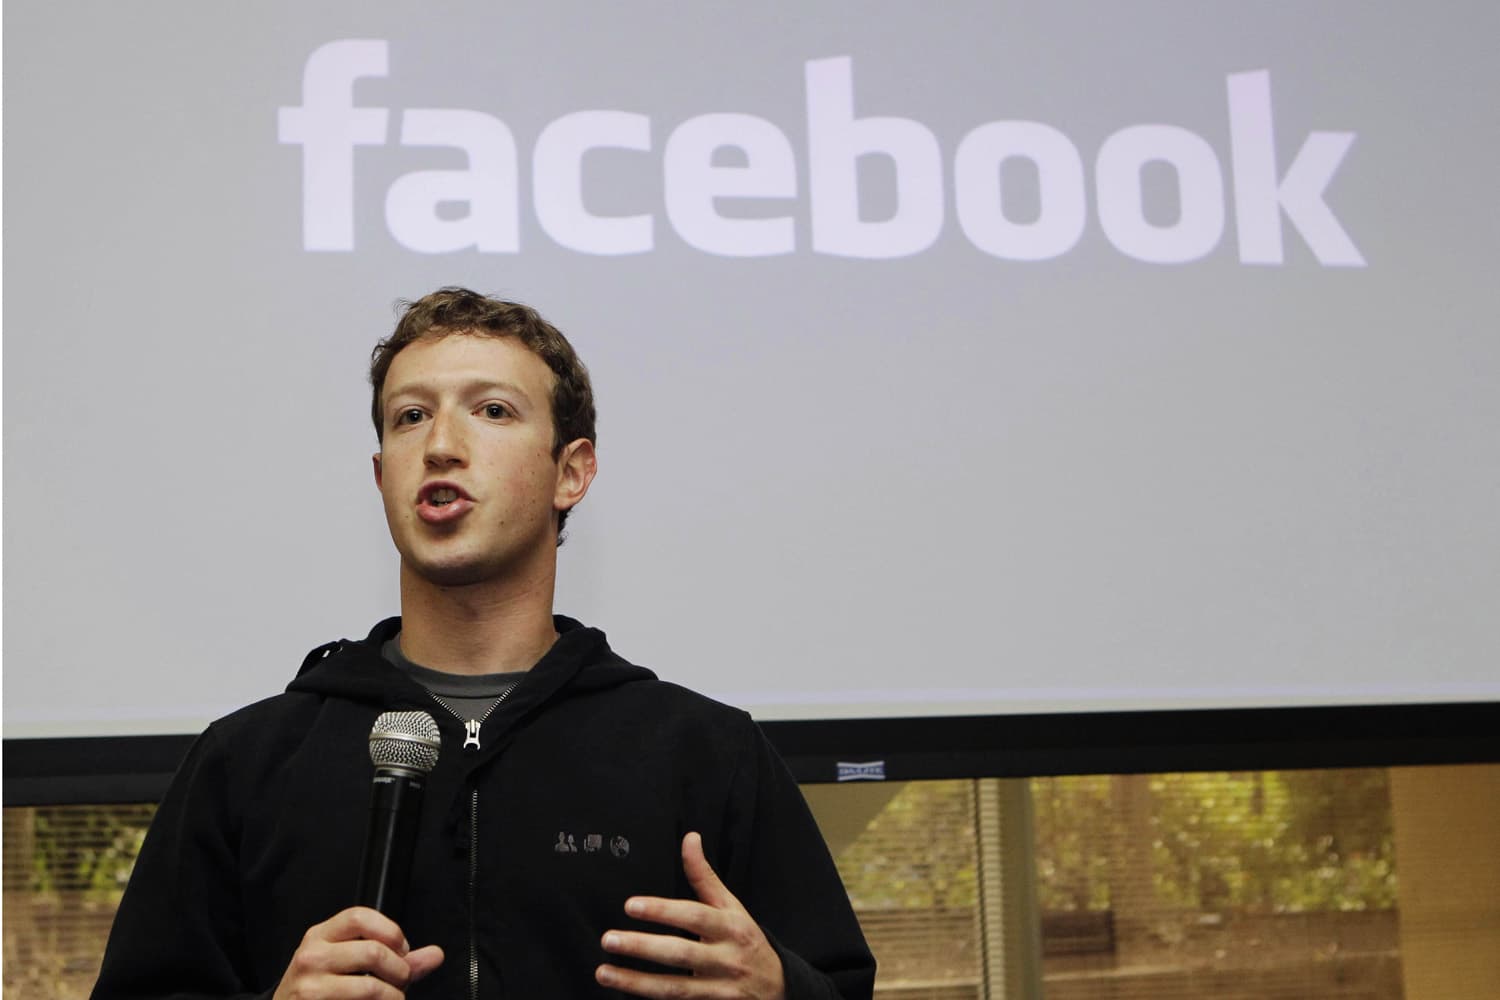 Facebook CEO Mark Zuckerberg in a 2010 file photo in Palo Alto, Calif. (Marcio Jose Sanchez/AP File)